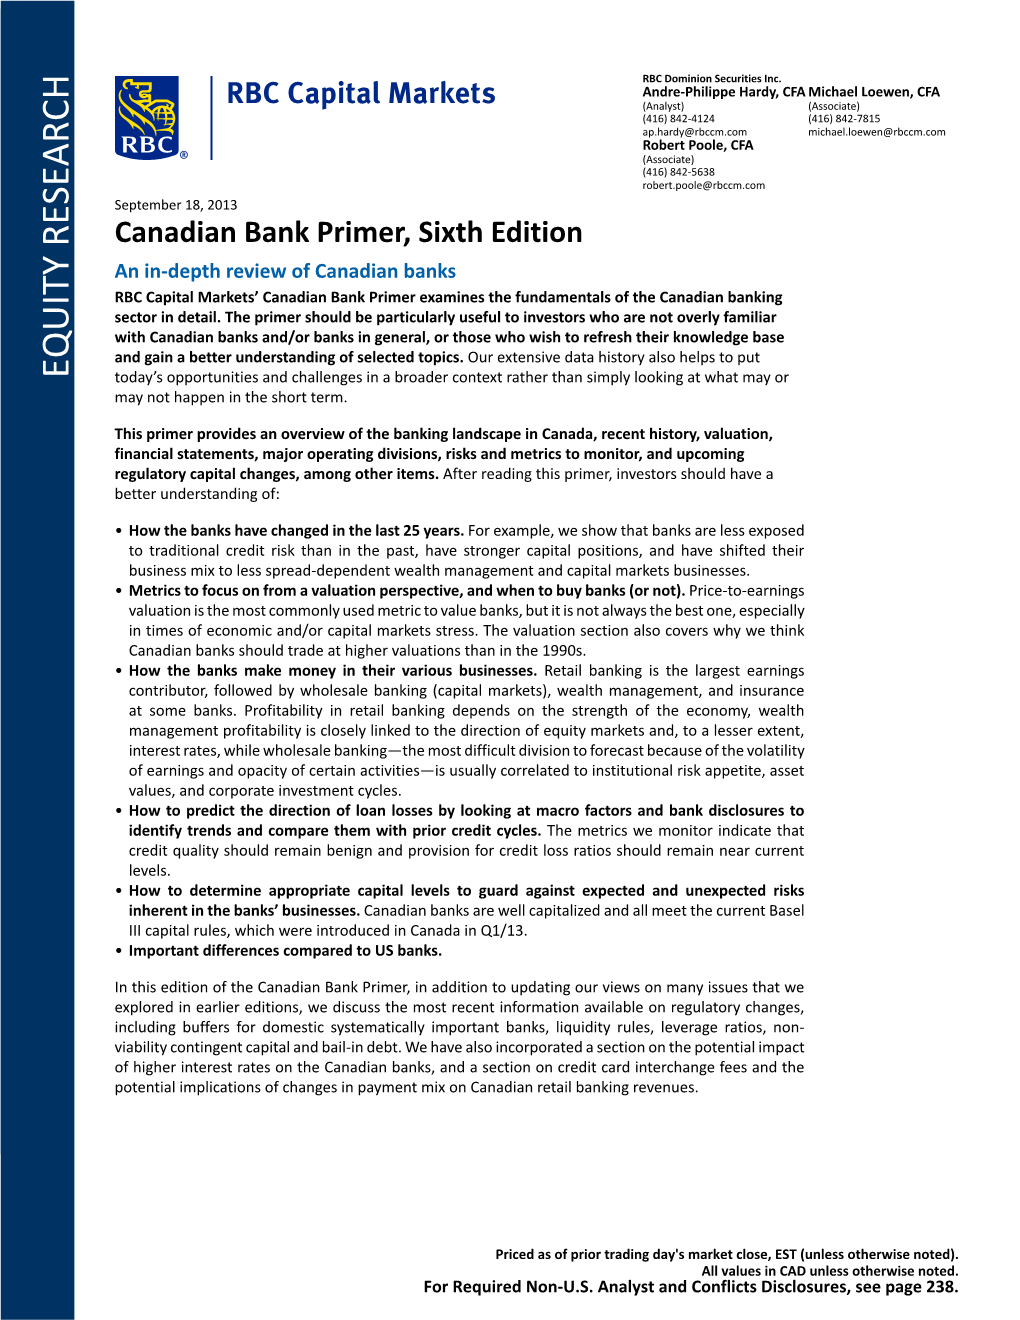 Canadian Bank Primer, Sixth Edition